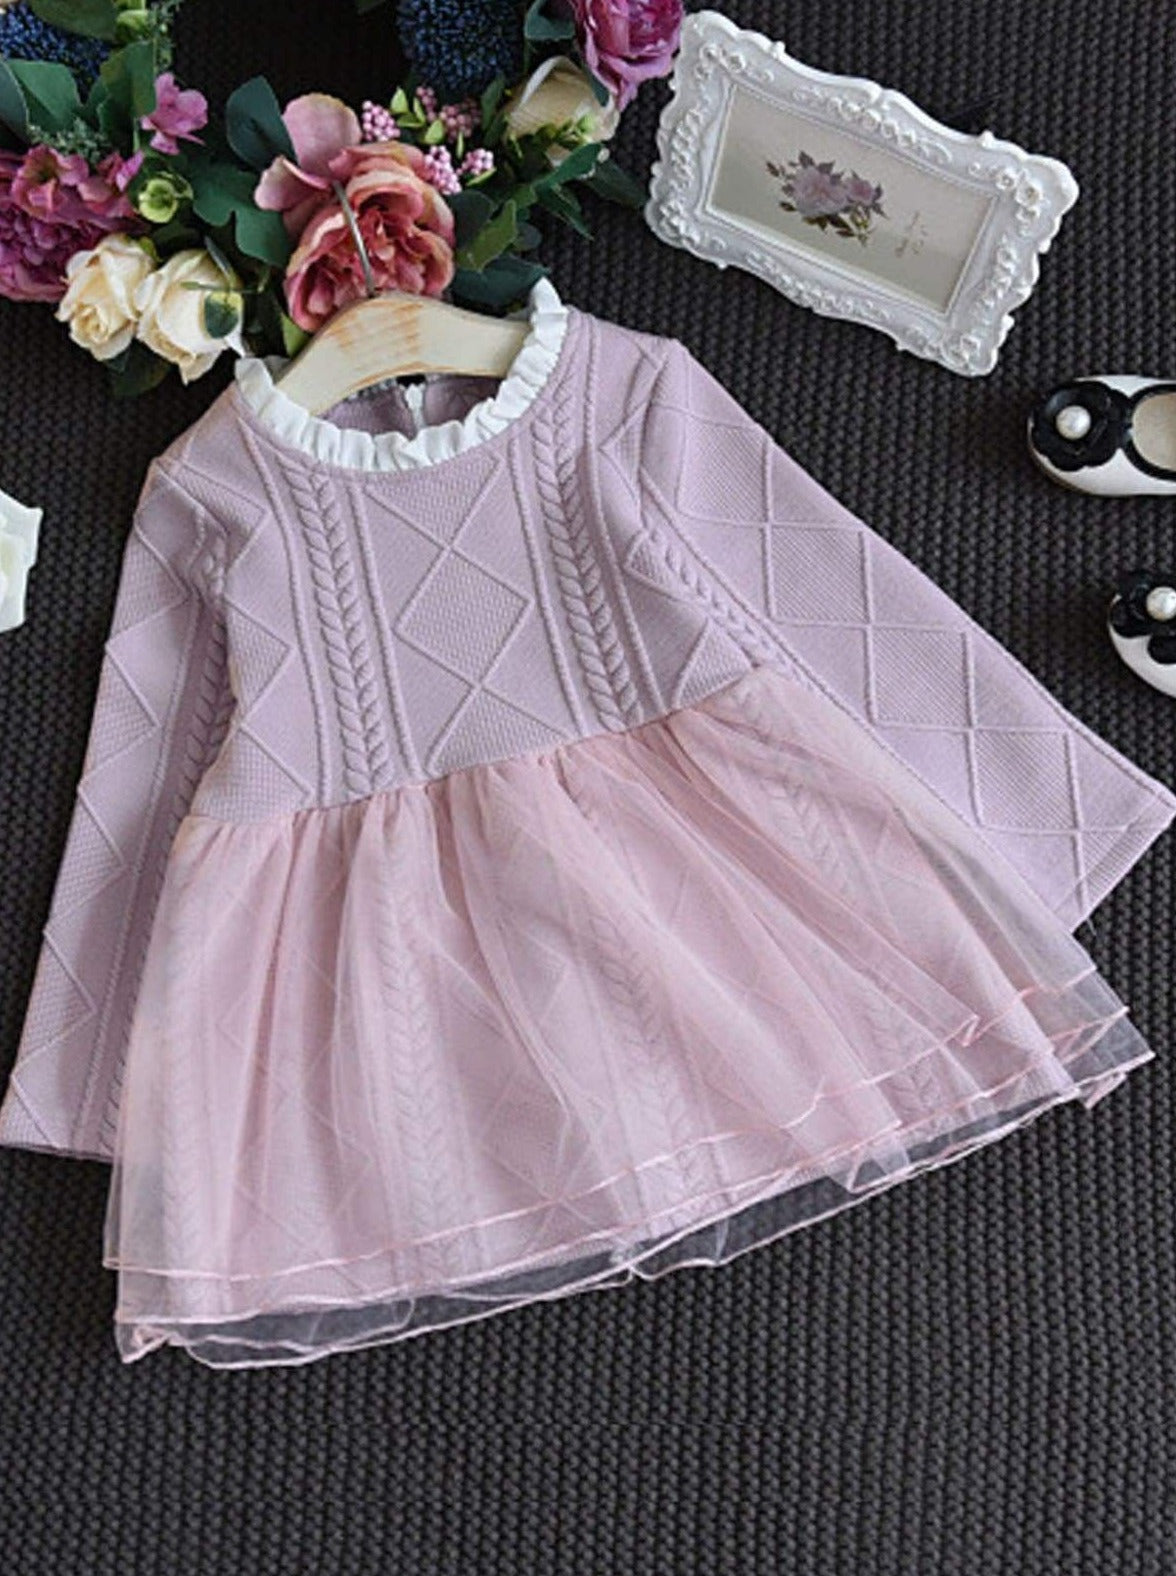 Pastel Princess Cable Knit Sweater Tutu Dress - Mia Belle Girls